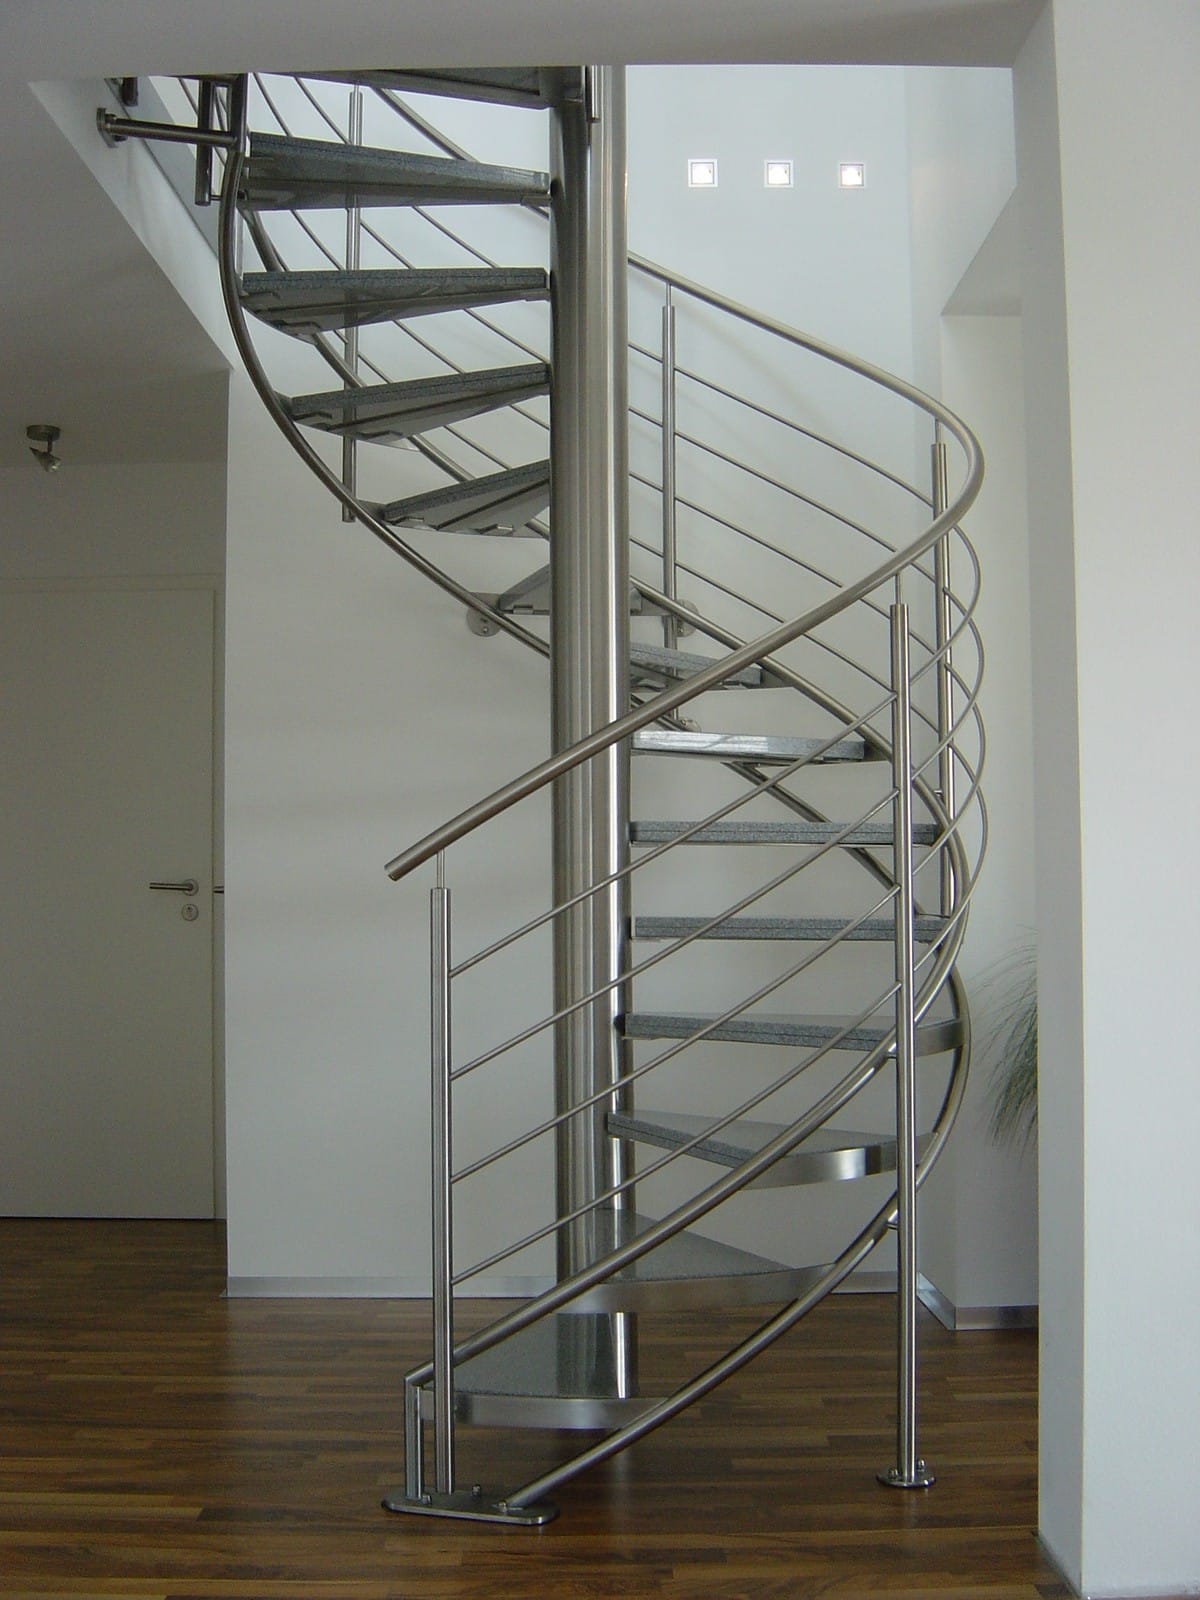 Escaliers helicoidal